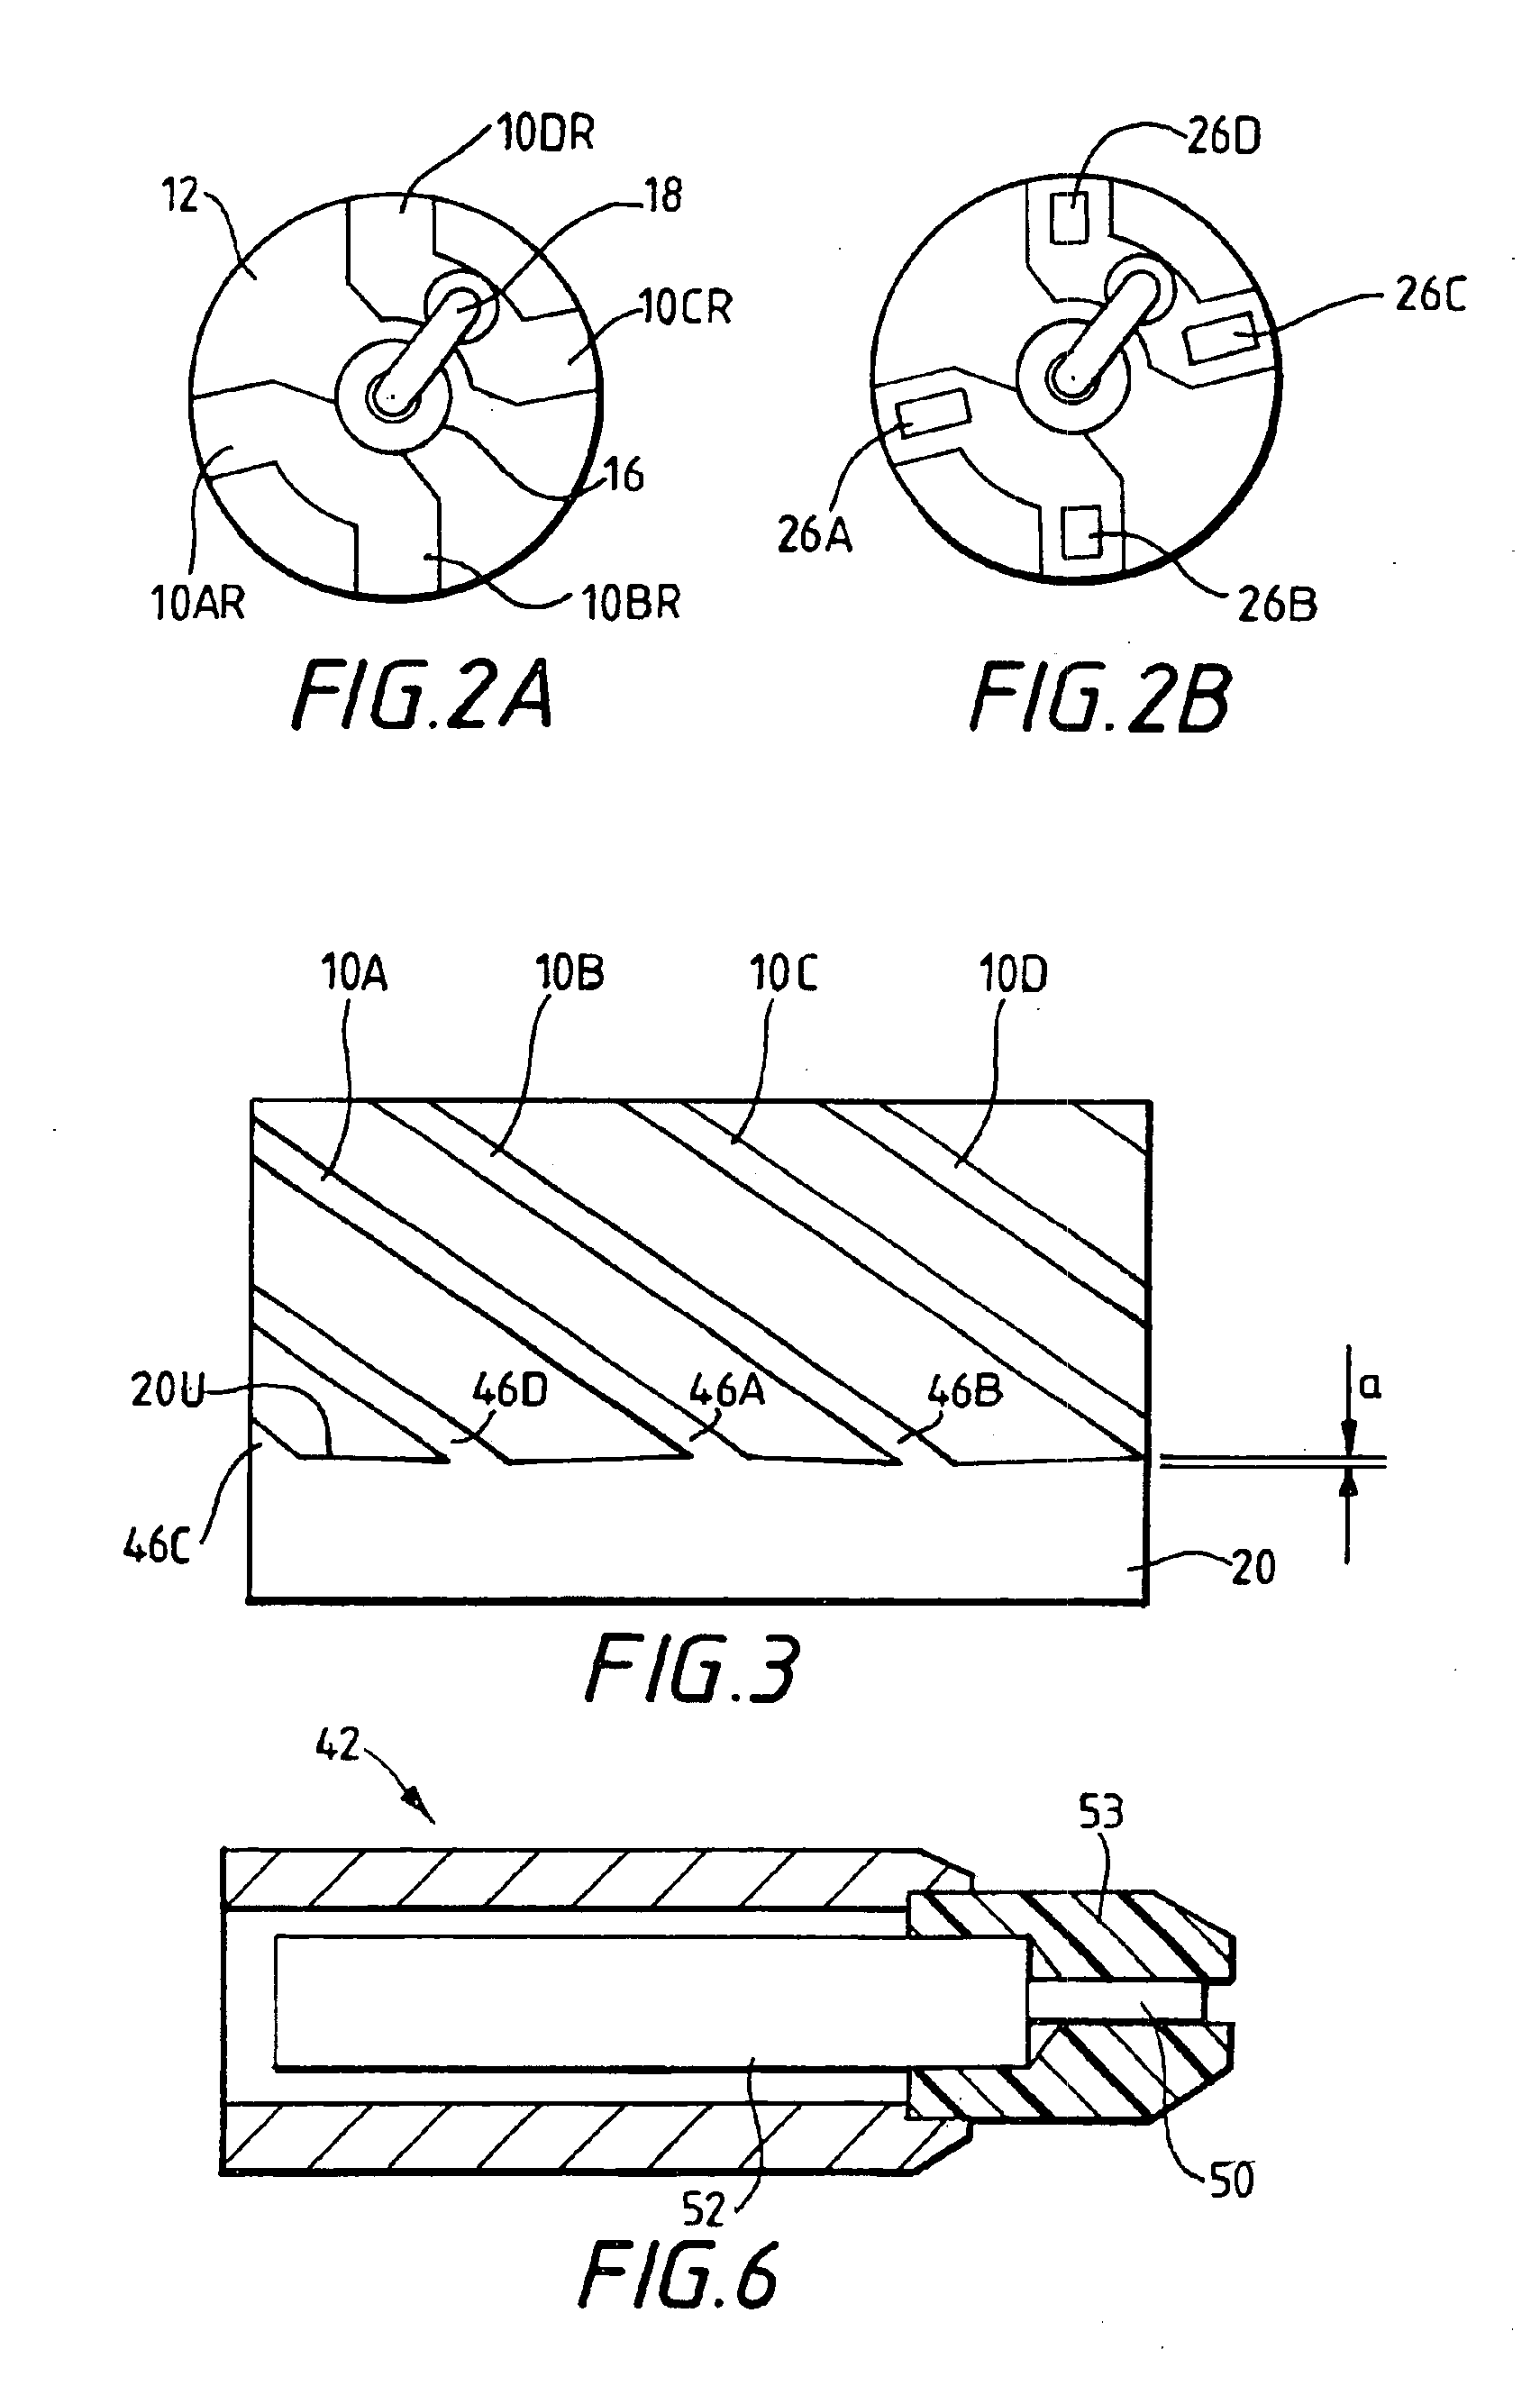 Method of producing an antenna